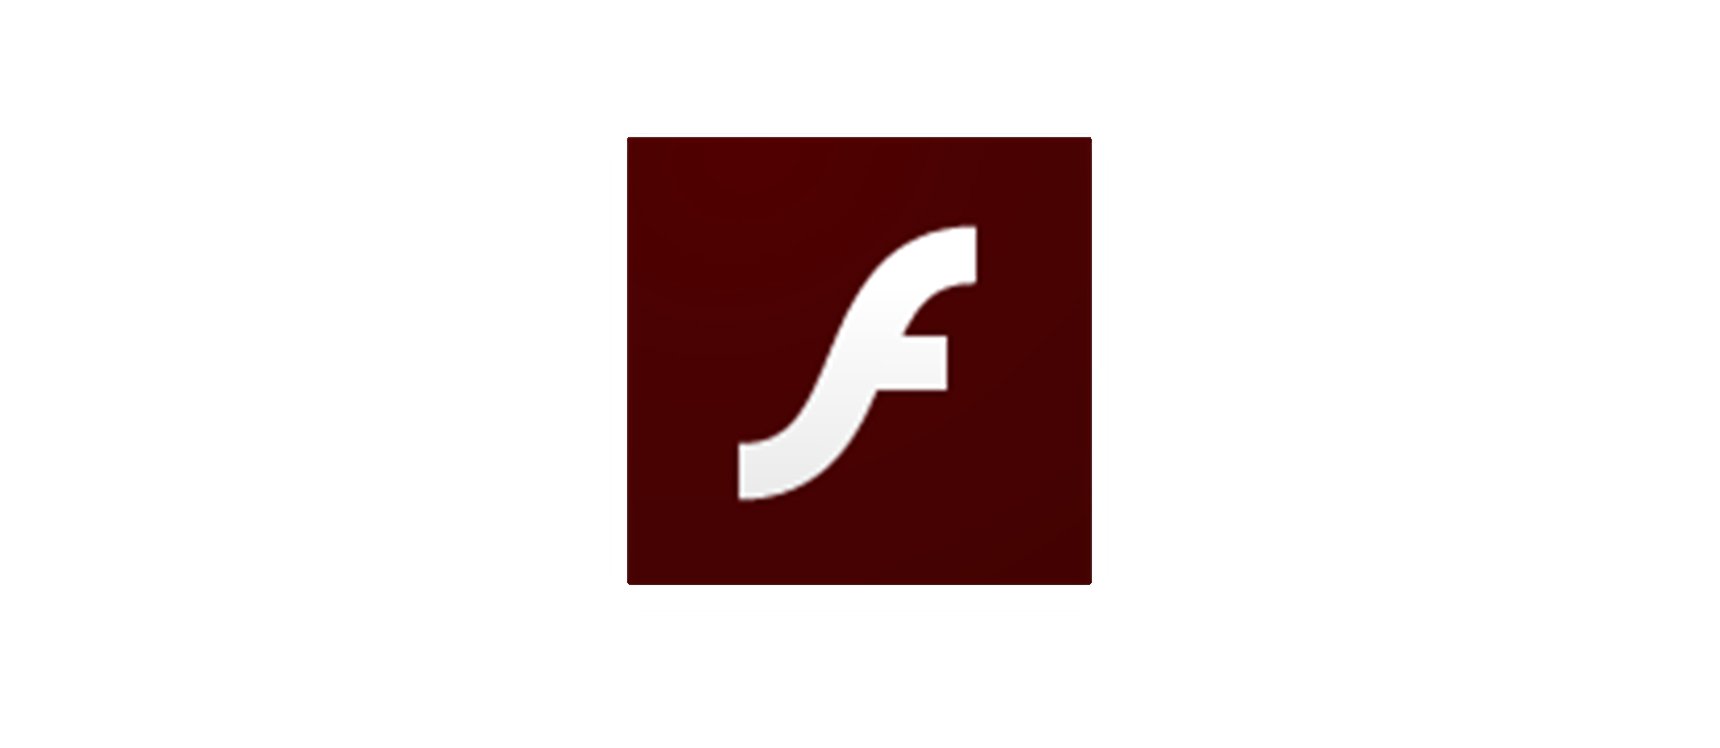 image of adobe flash player icon